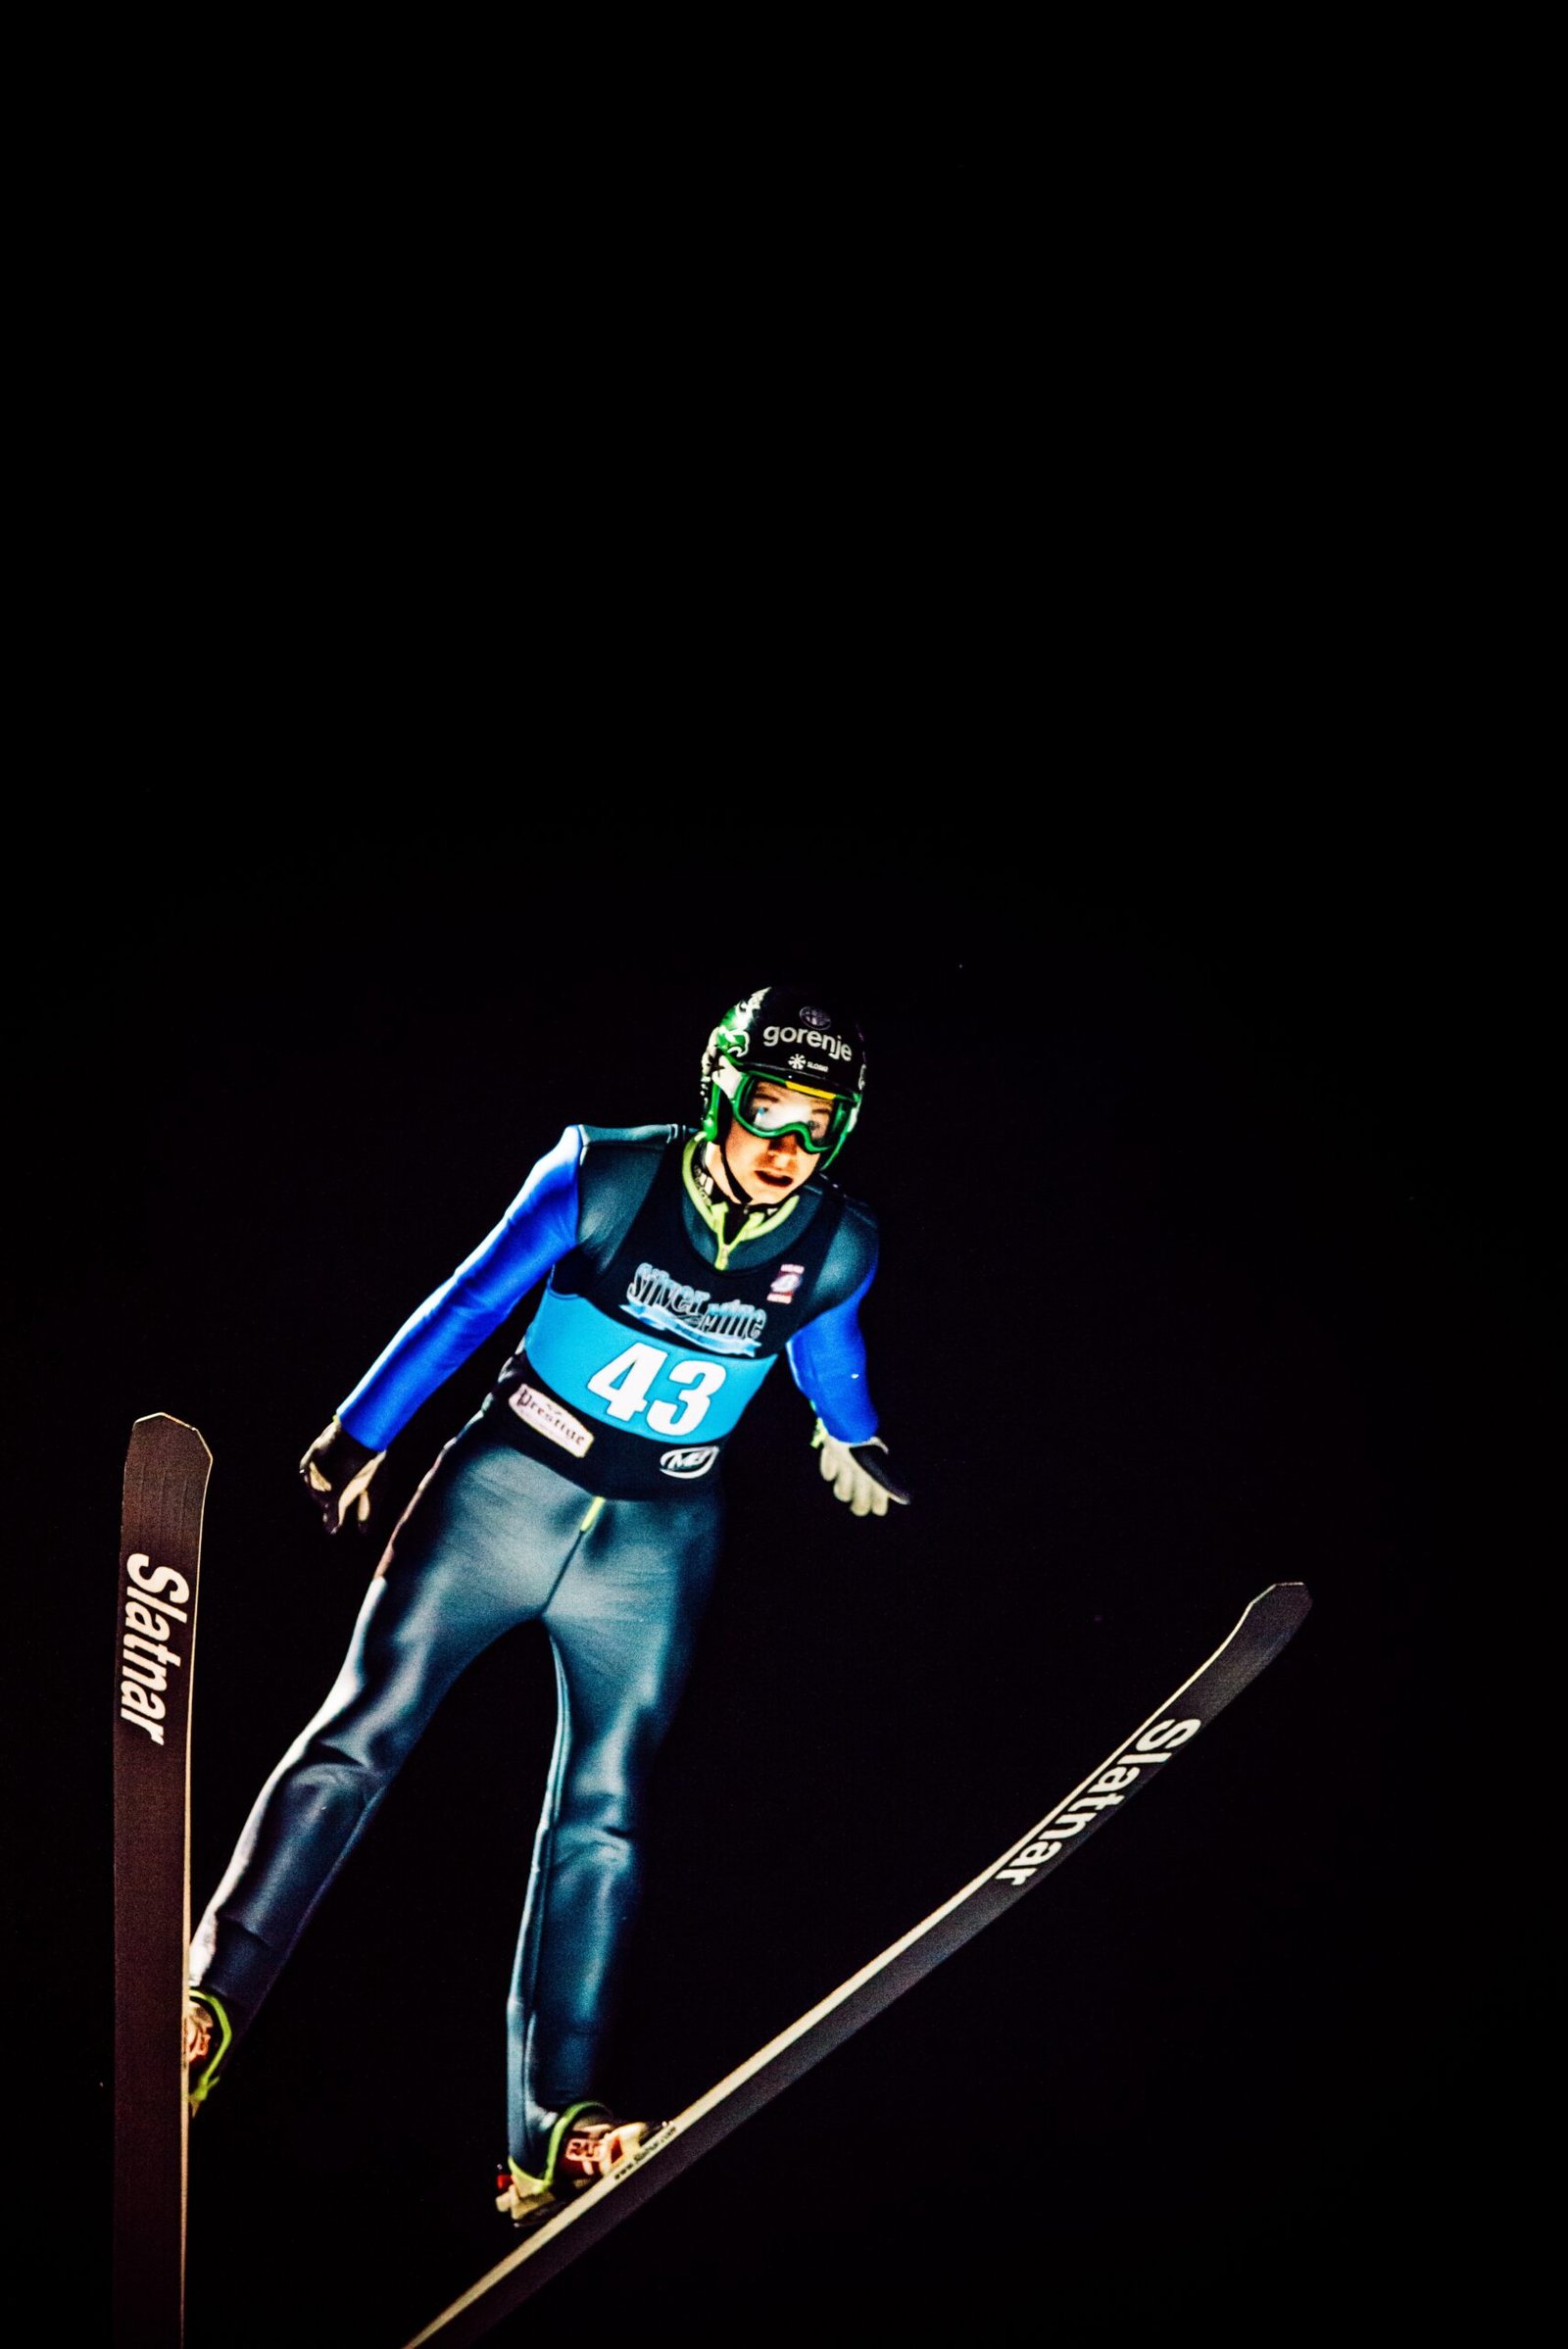 The World Record Ski Jump